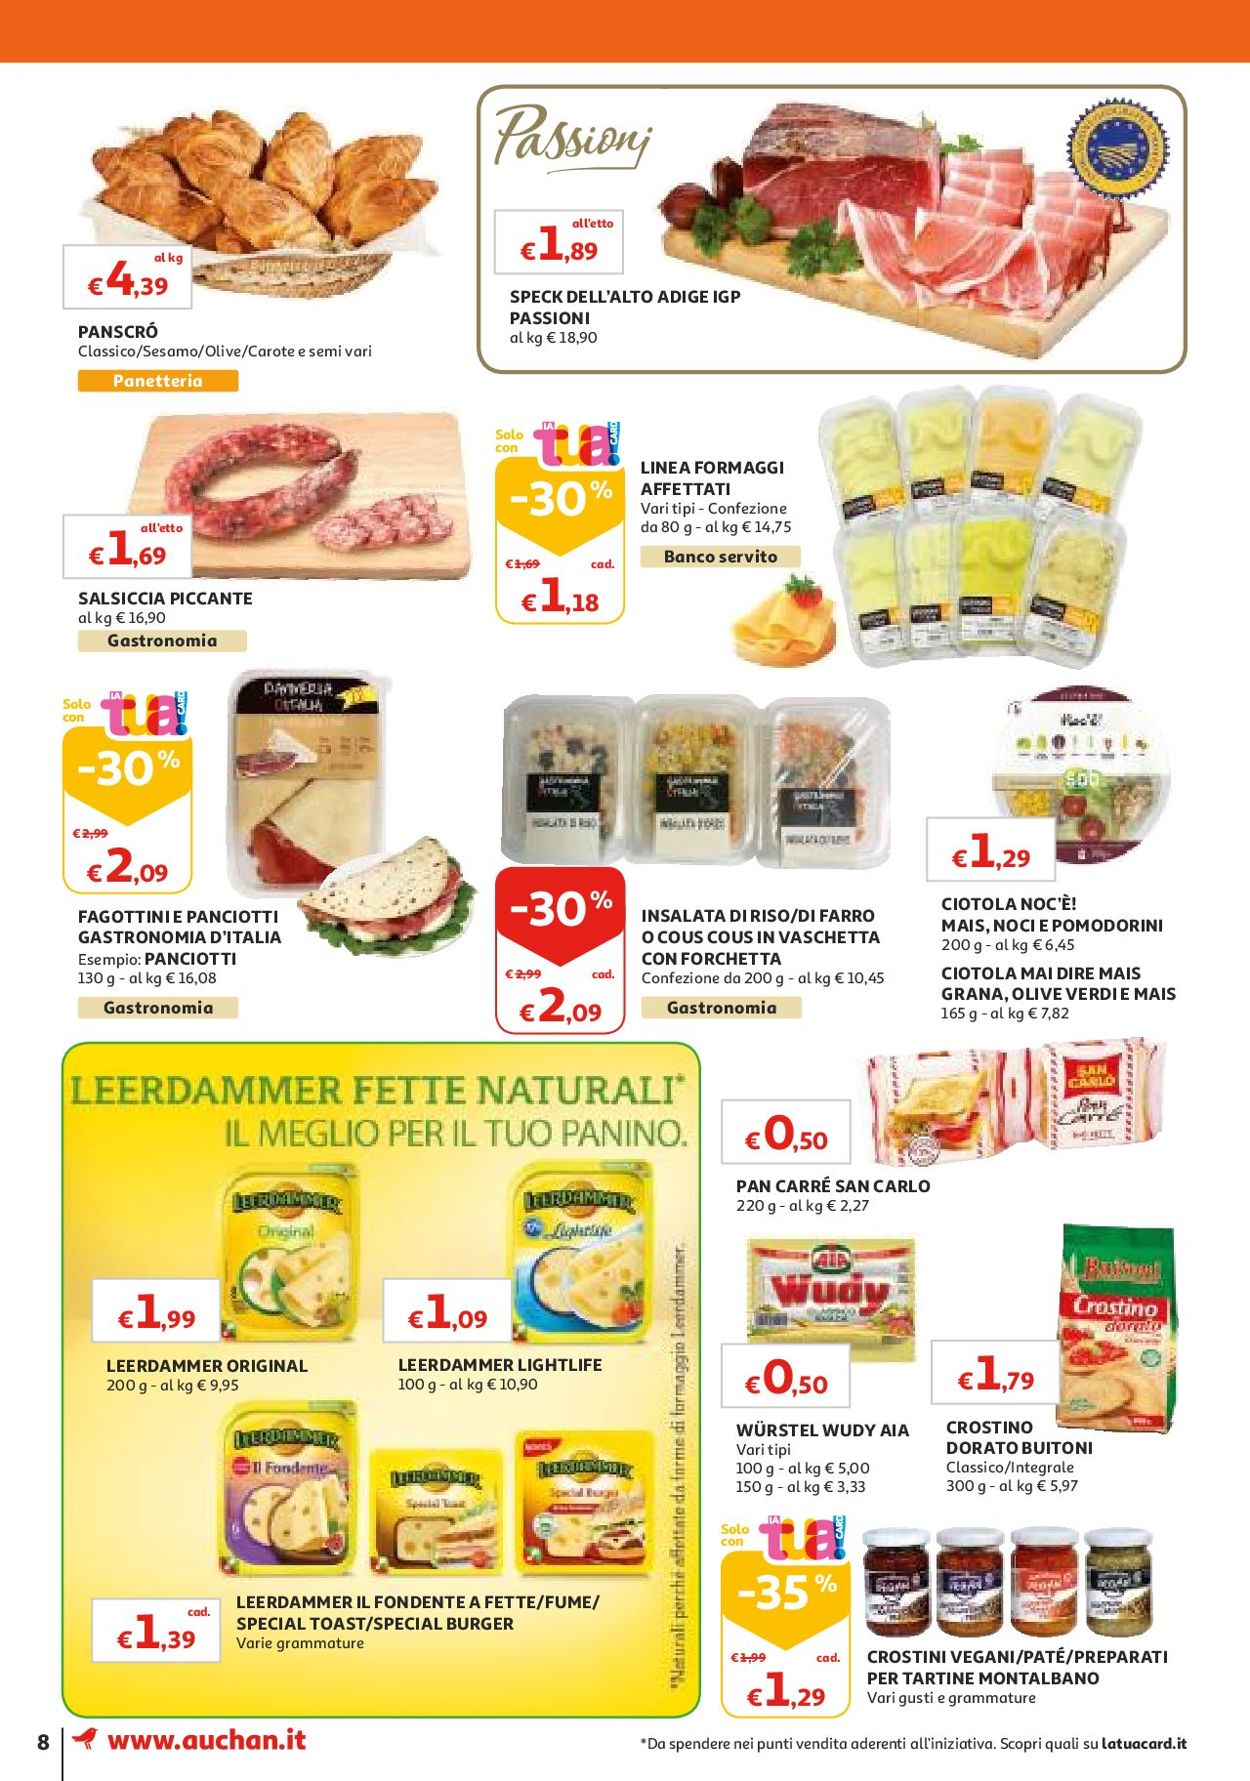 Volantino Auchan - Offerte 23/04-01/05/2019 (Pagina 8)